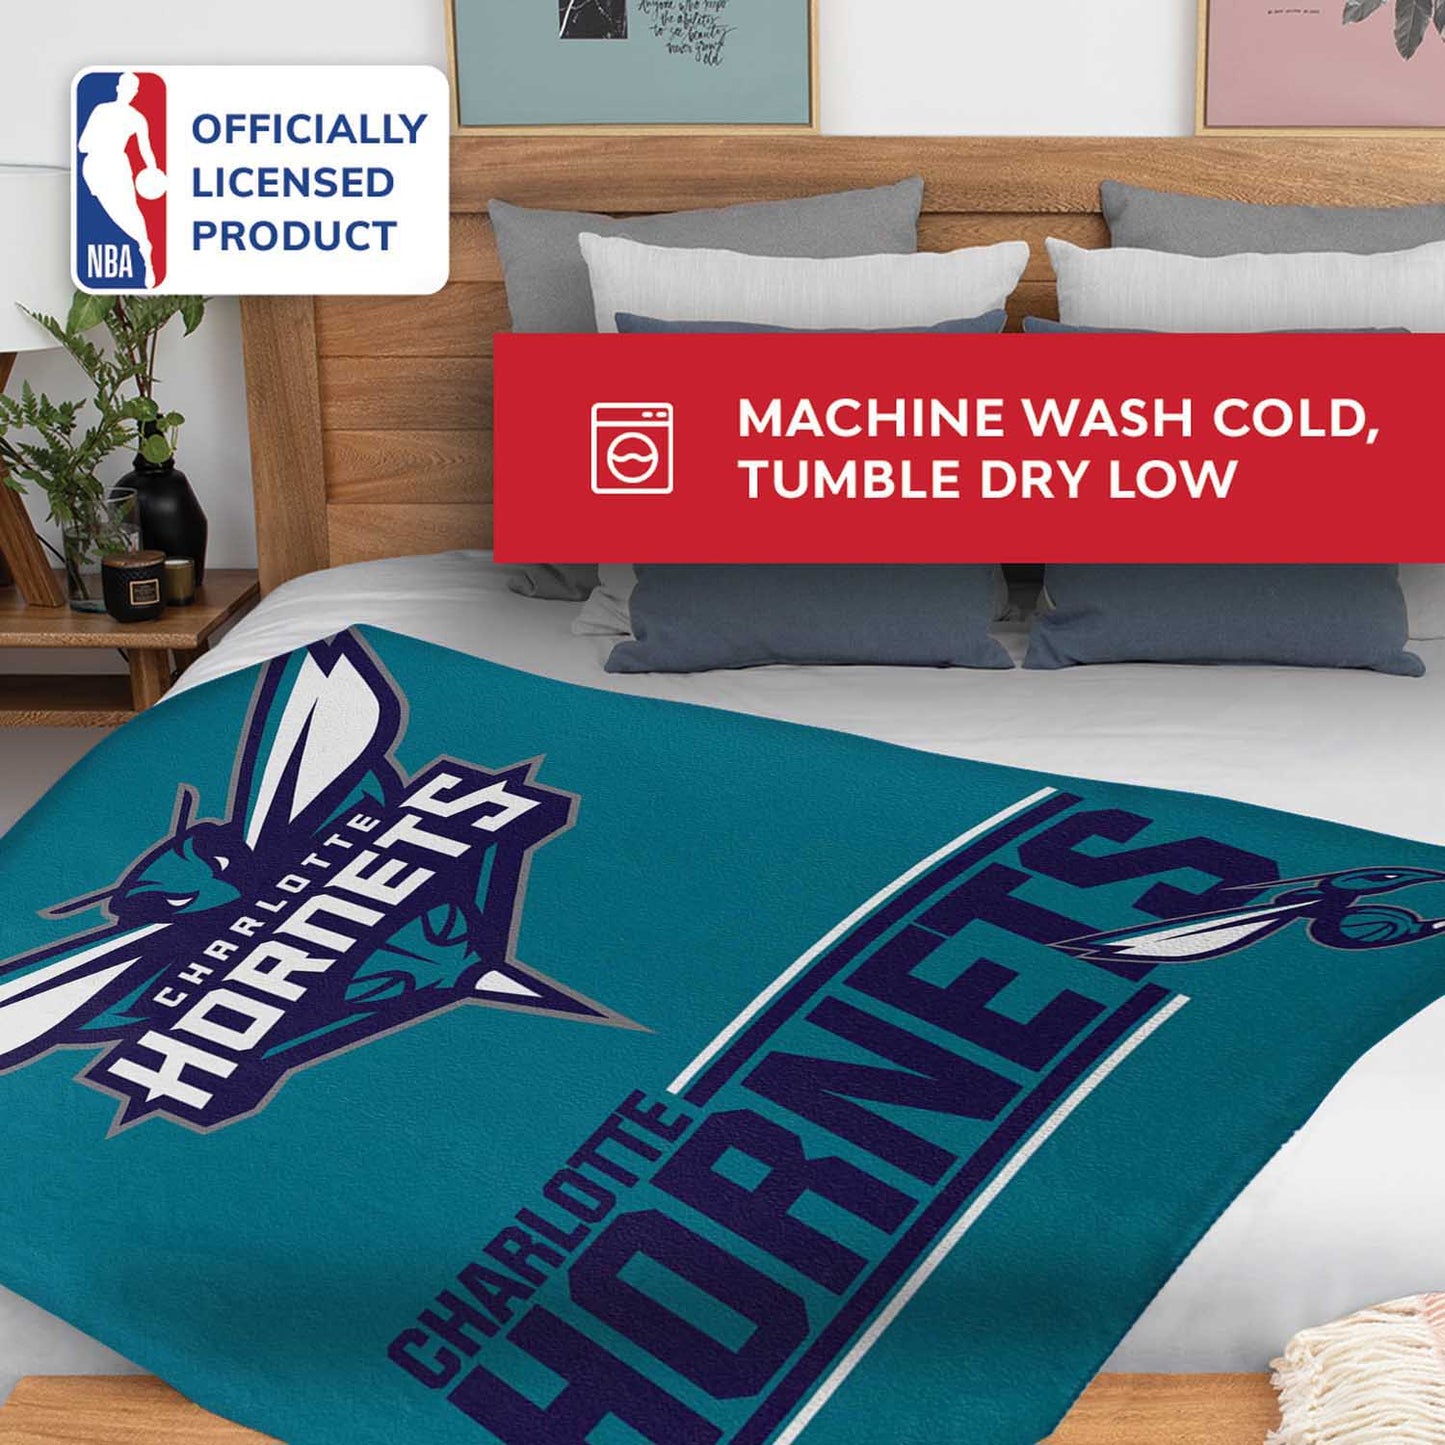 Charlotte Hornets NBA Double Sided Blanket - Teal